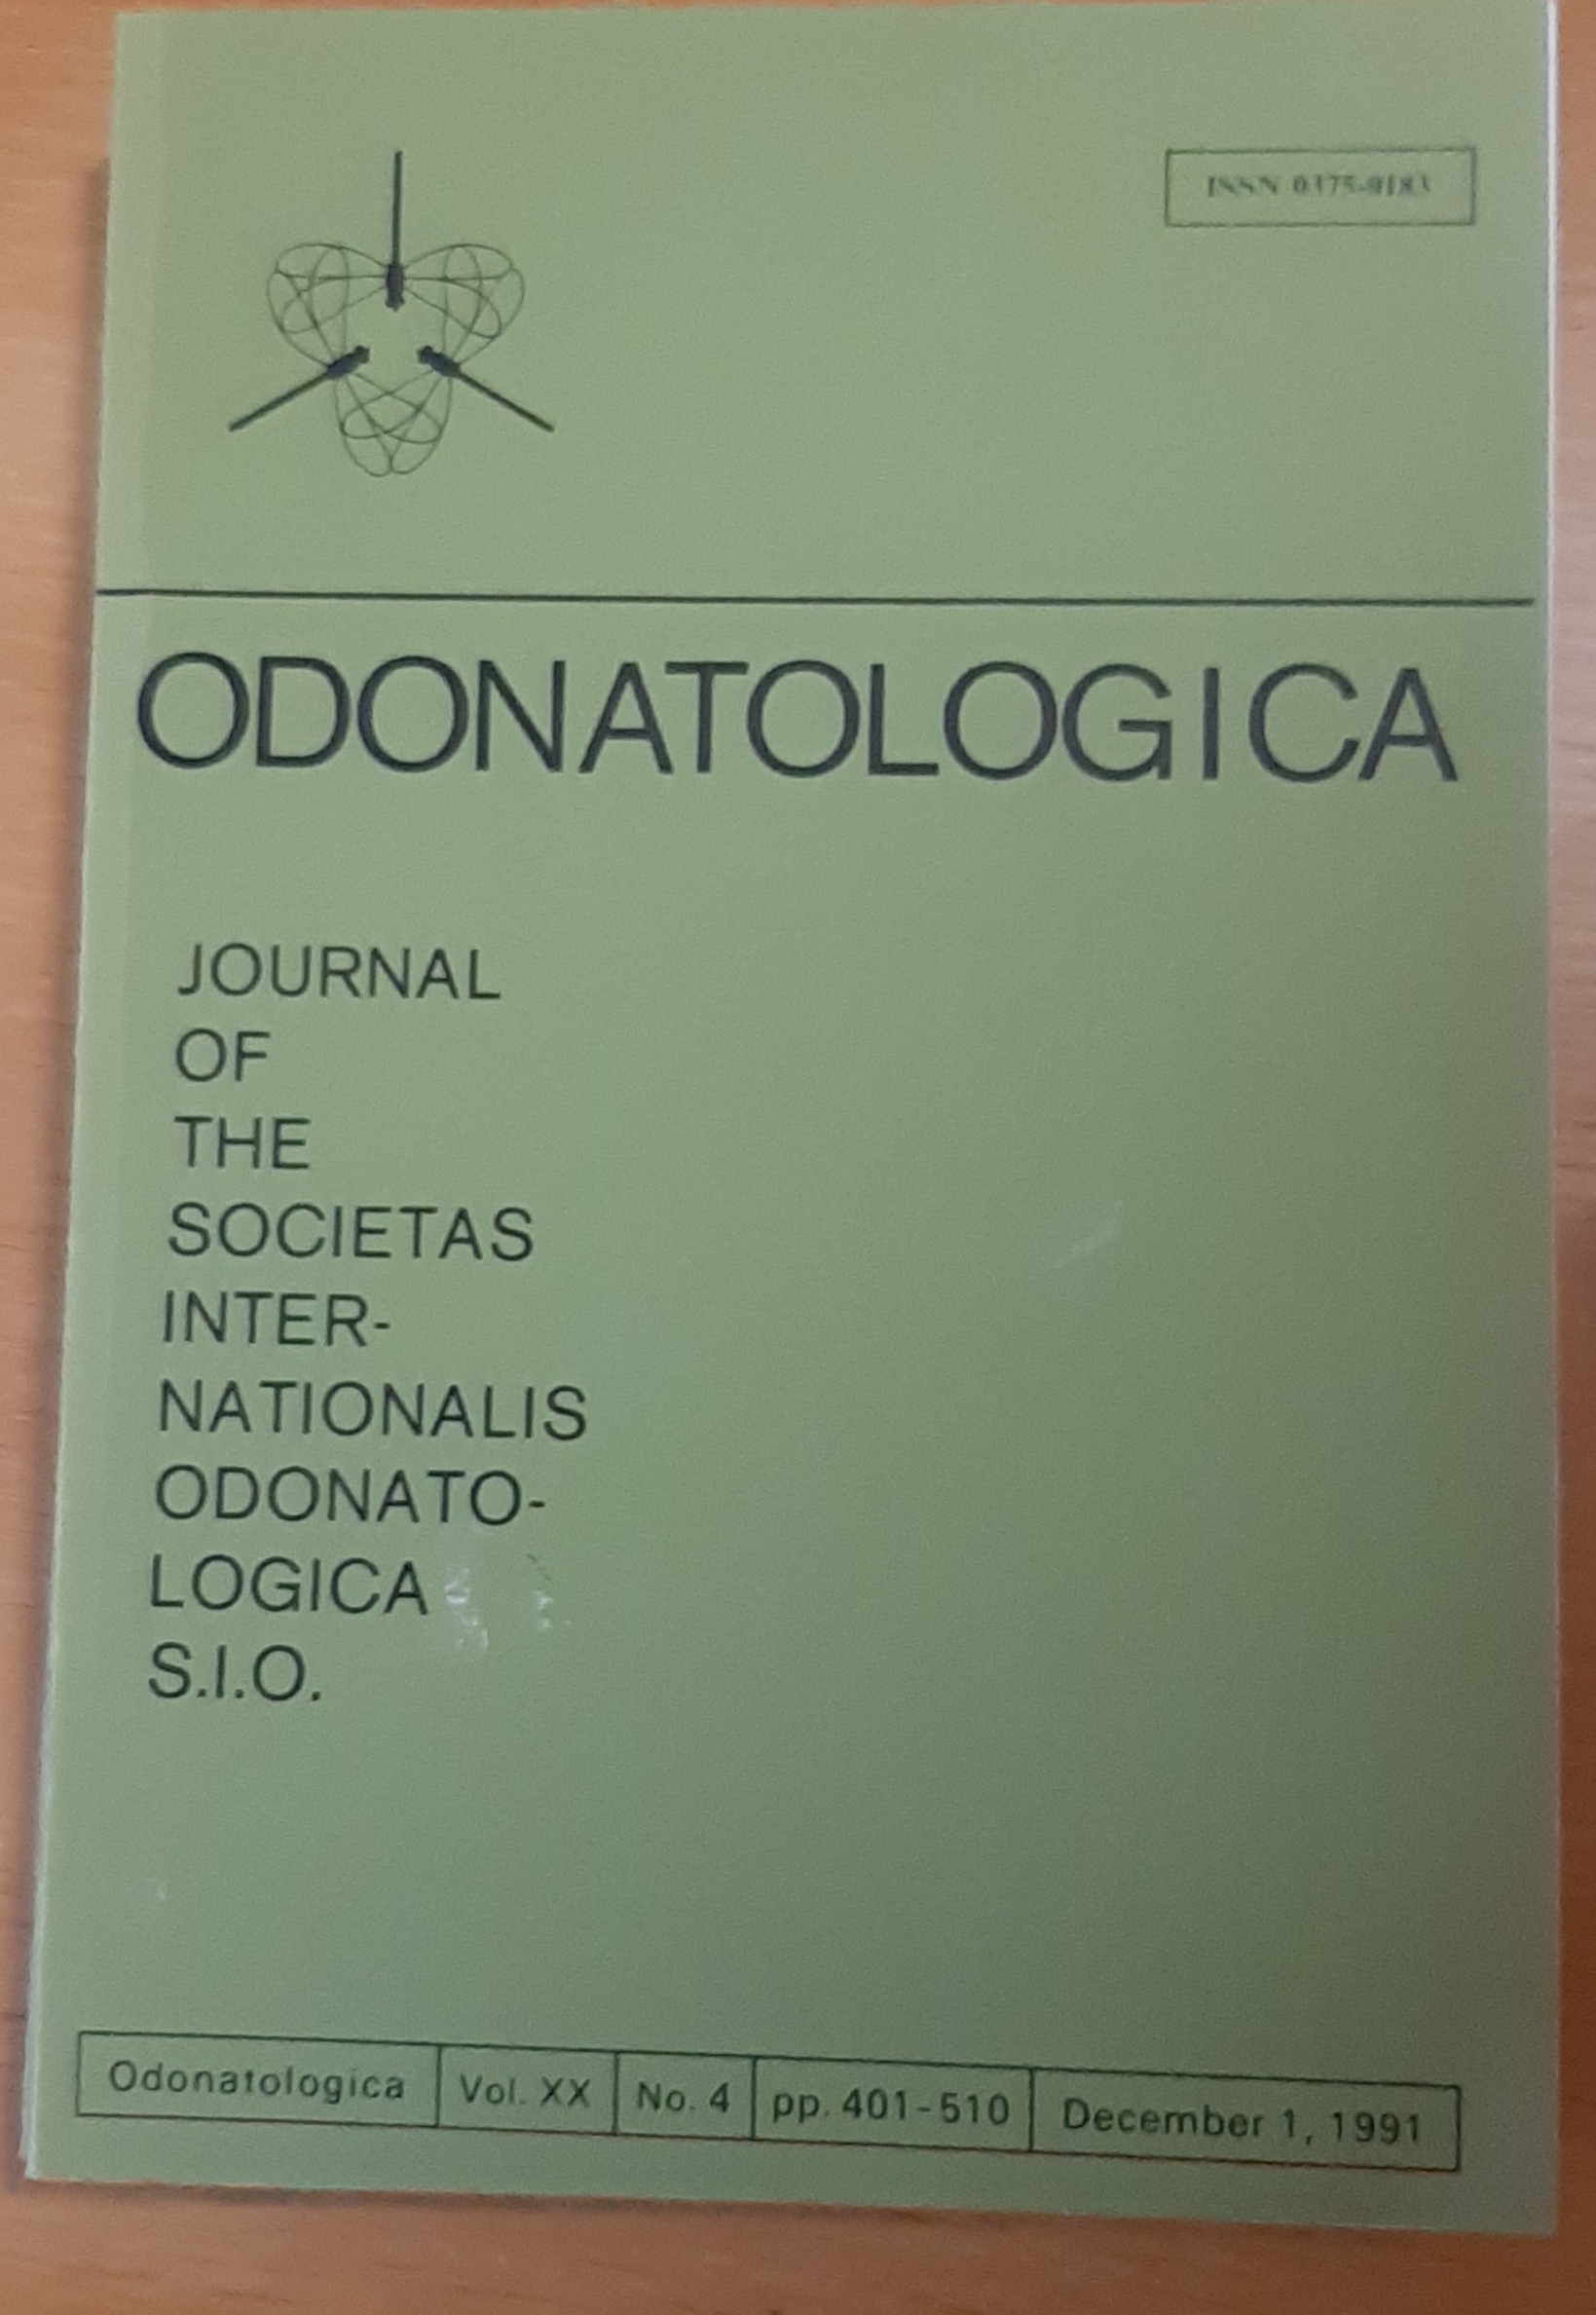 Odonatologica 1991/20. évf. 4. szám Journal of the Societas Internationalis Odonatologica S.I.O. (Rippl-Rónai Múzeum RR-F)